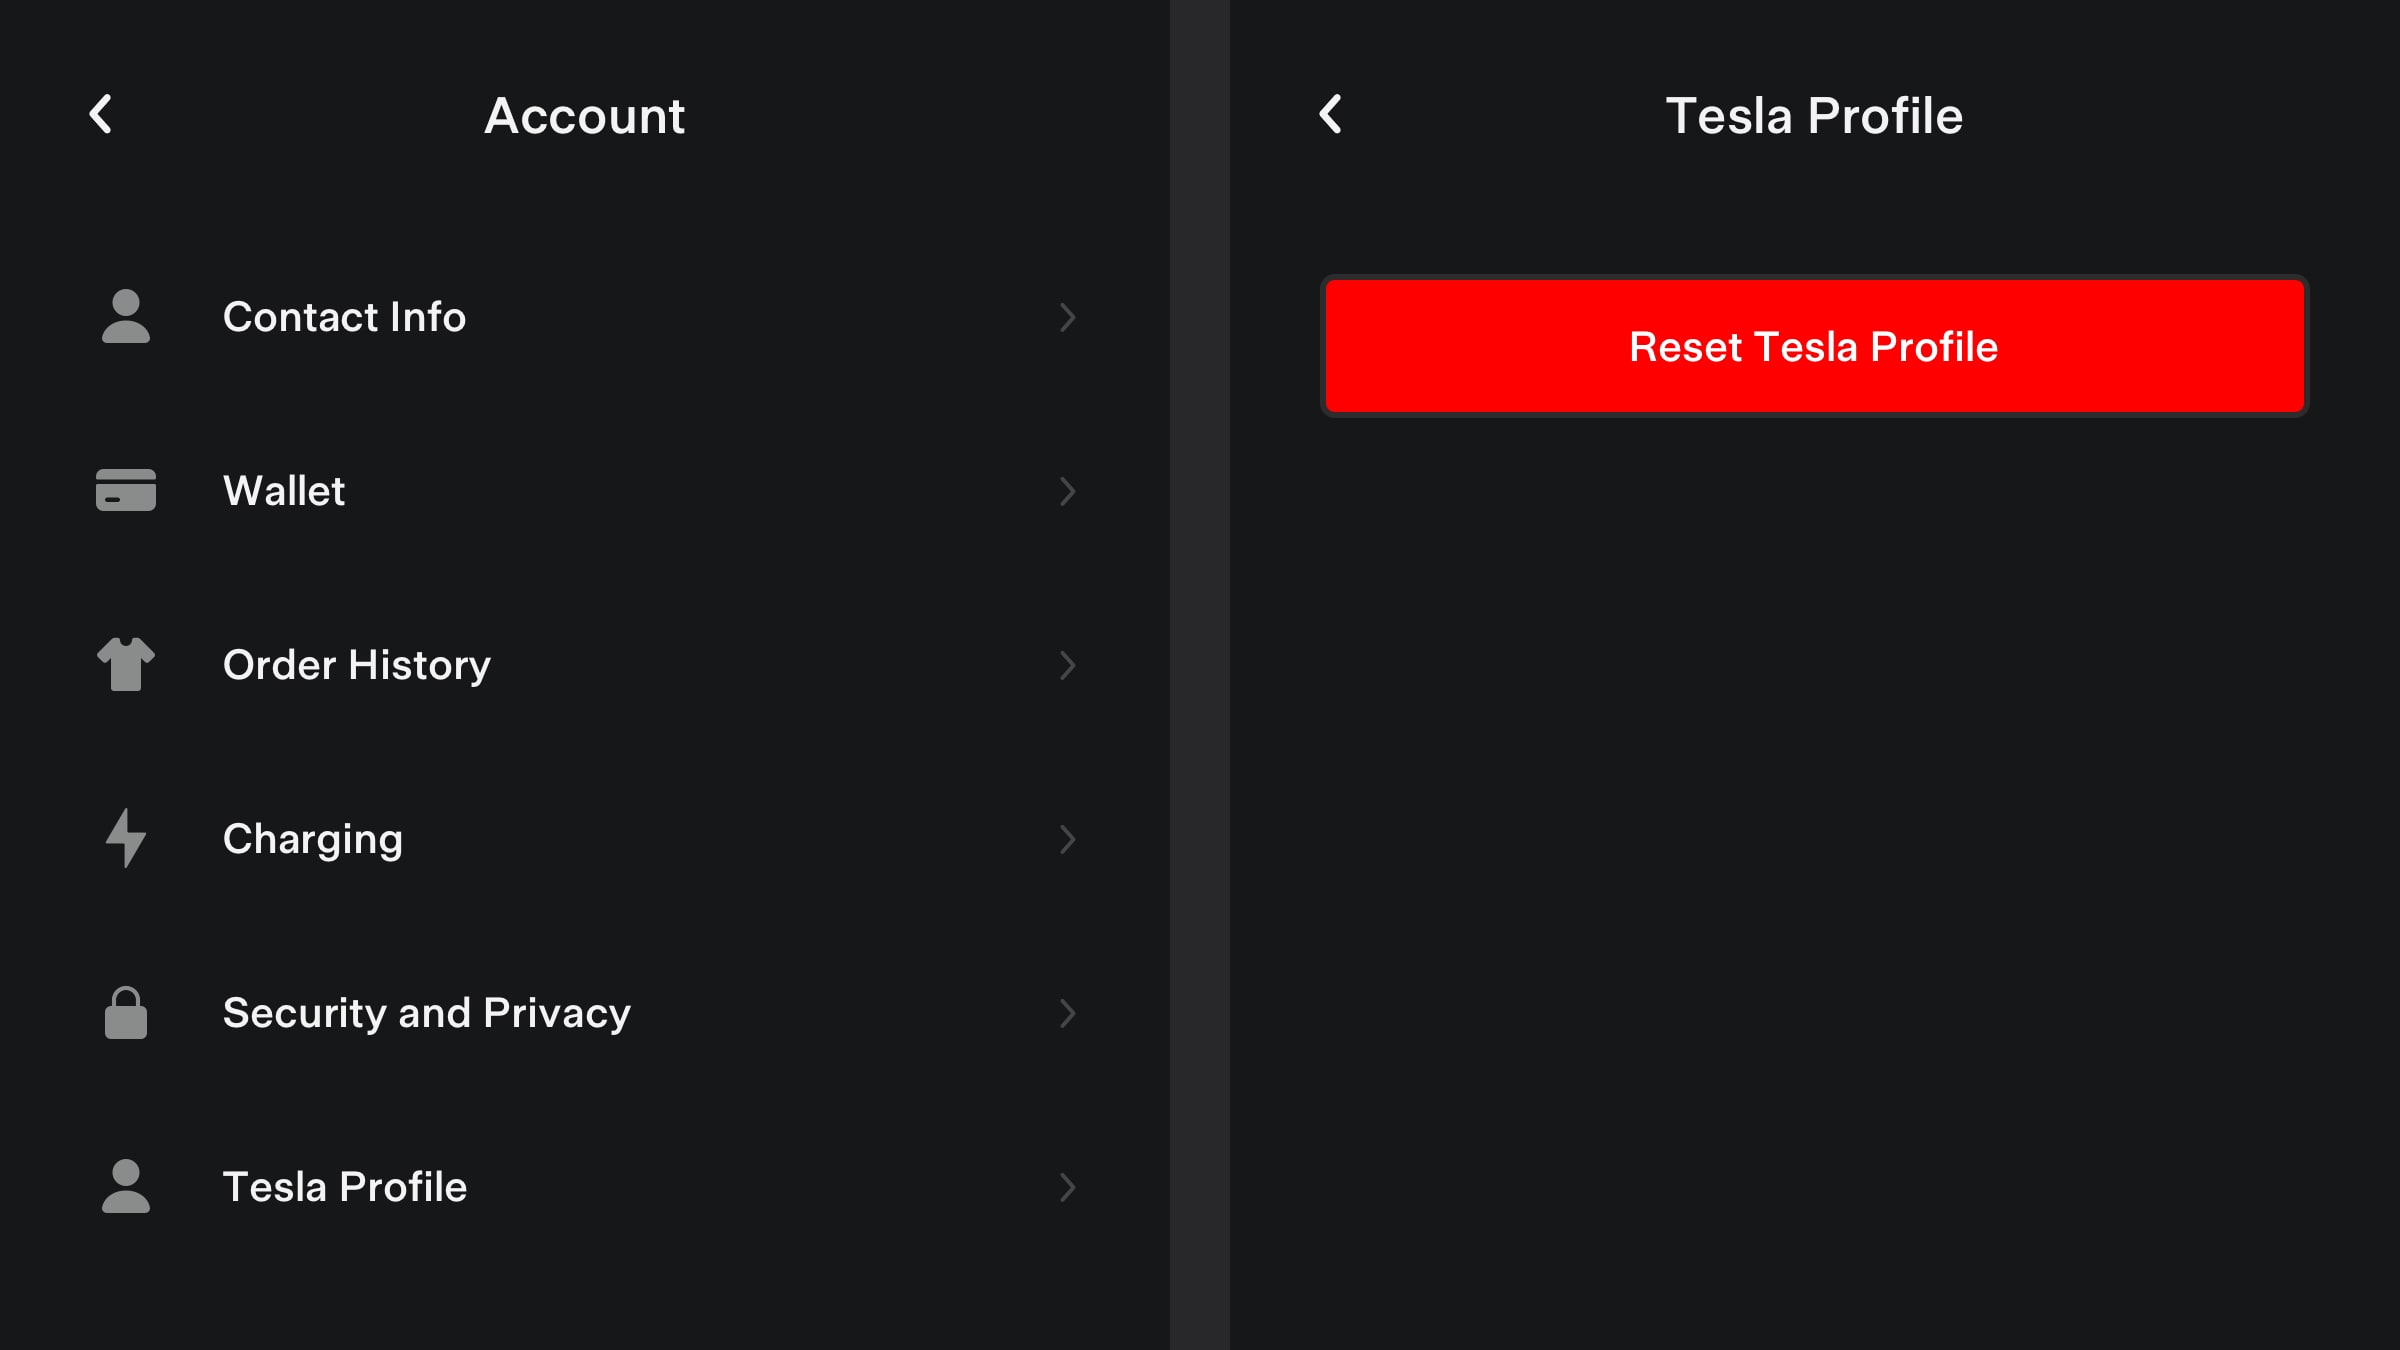 Tesla Reset Tesla Profile feature in update 4.22